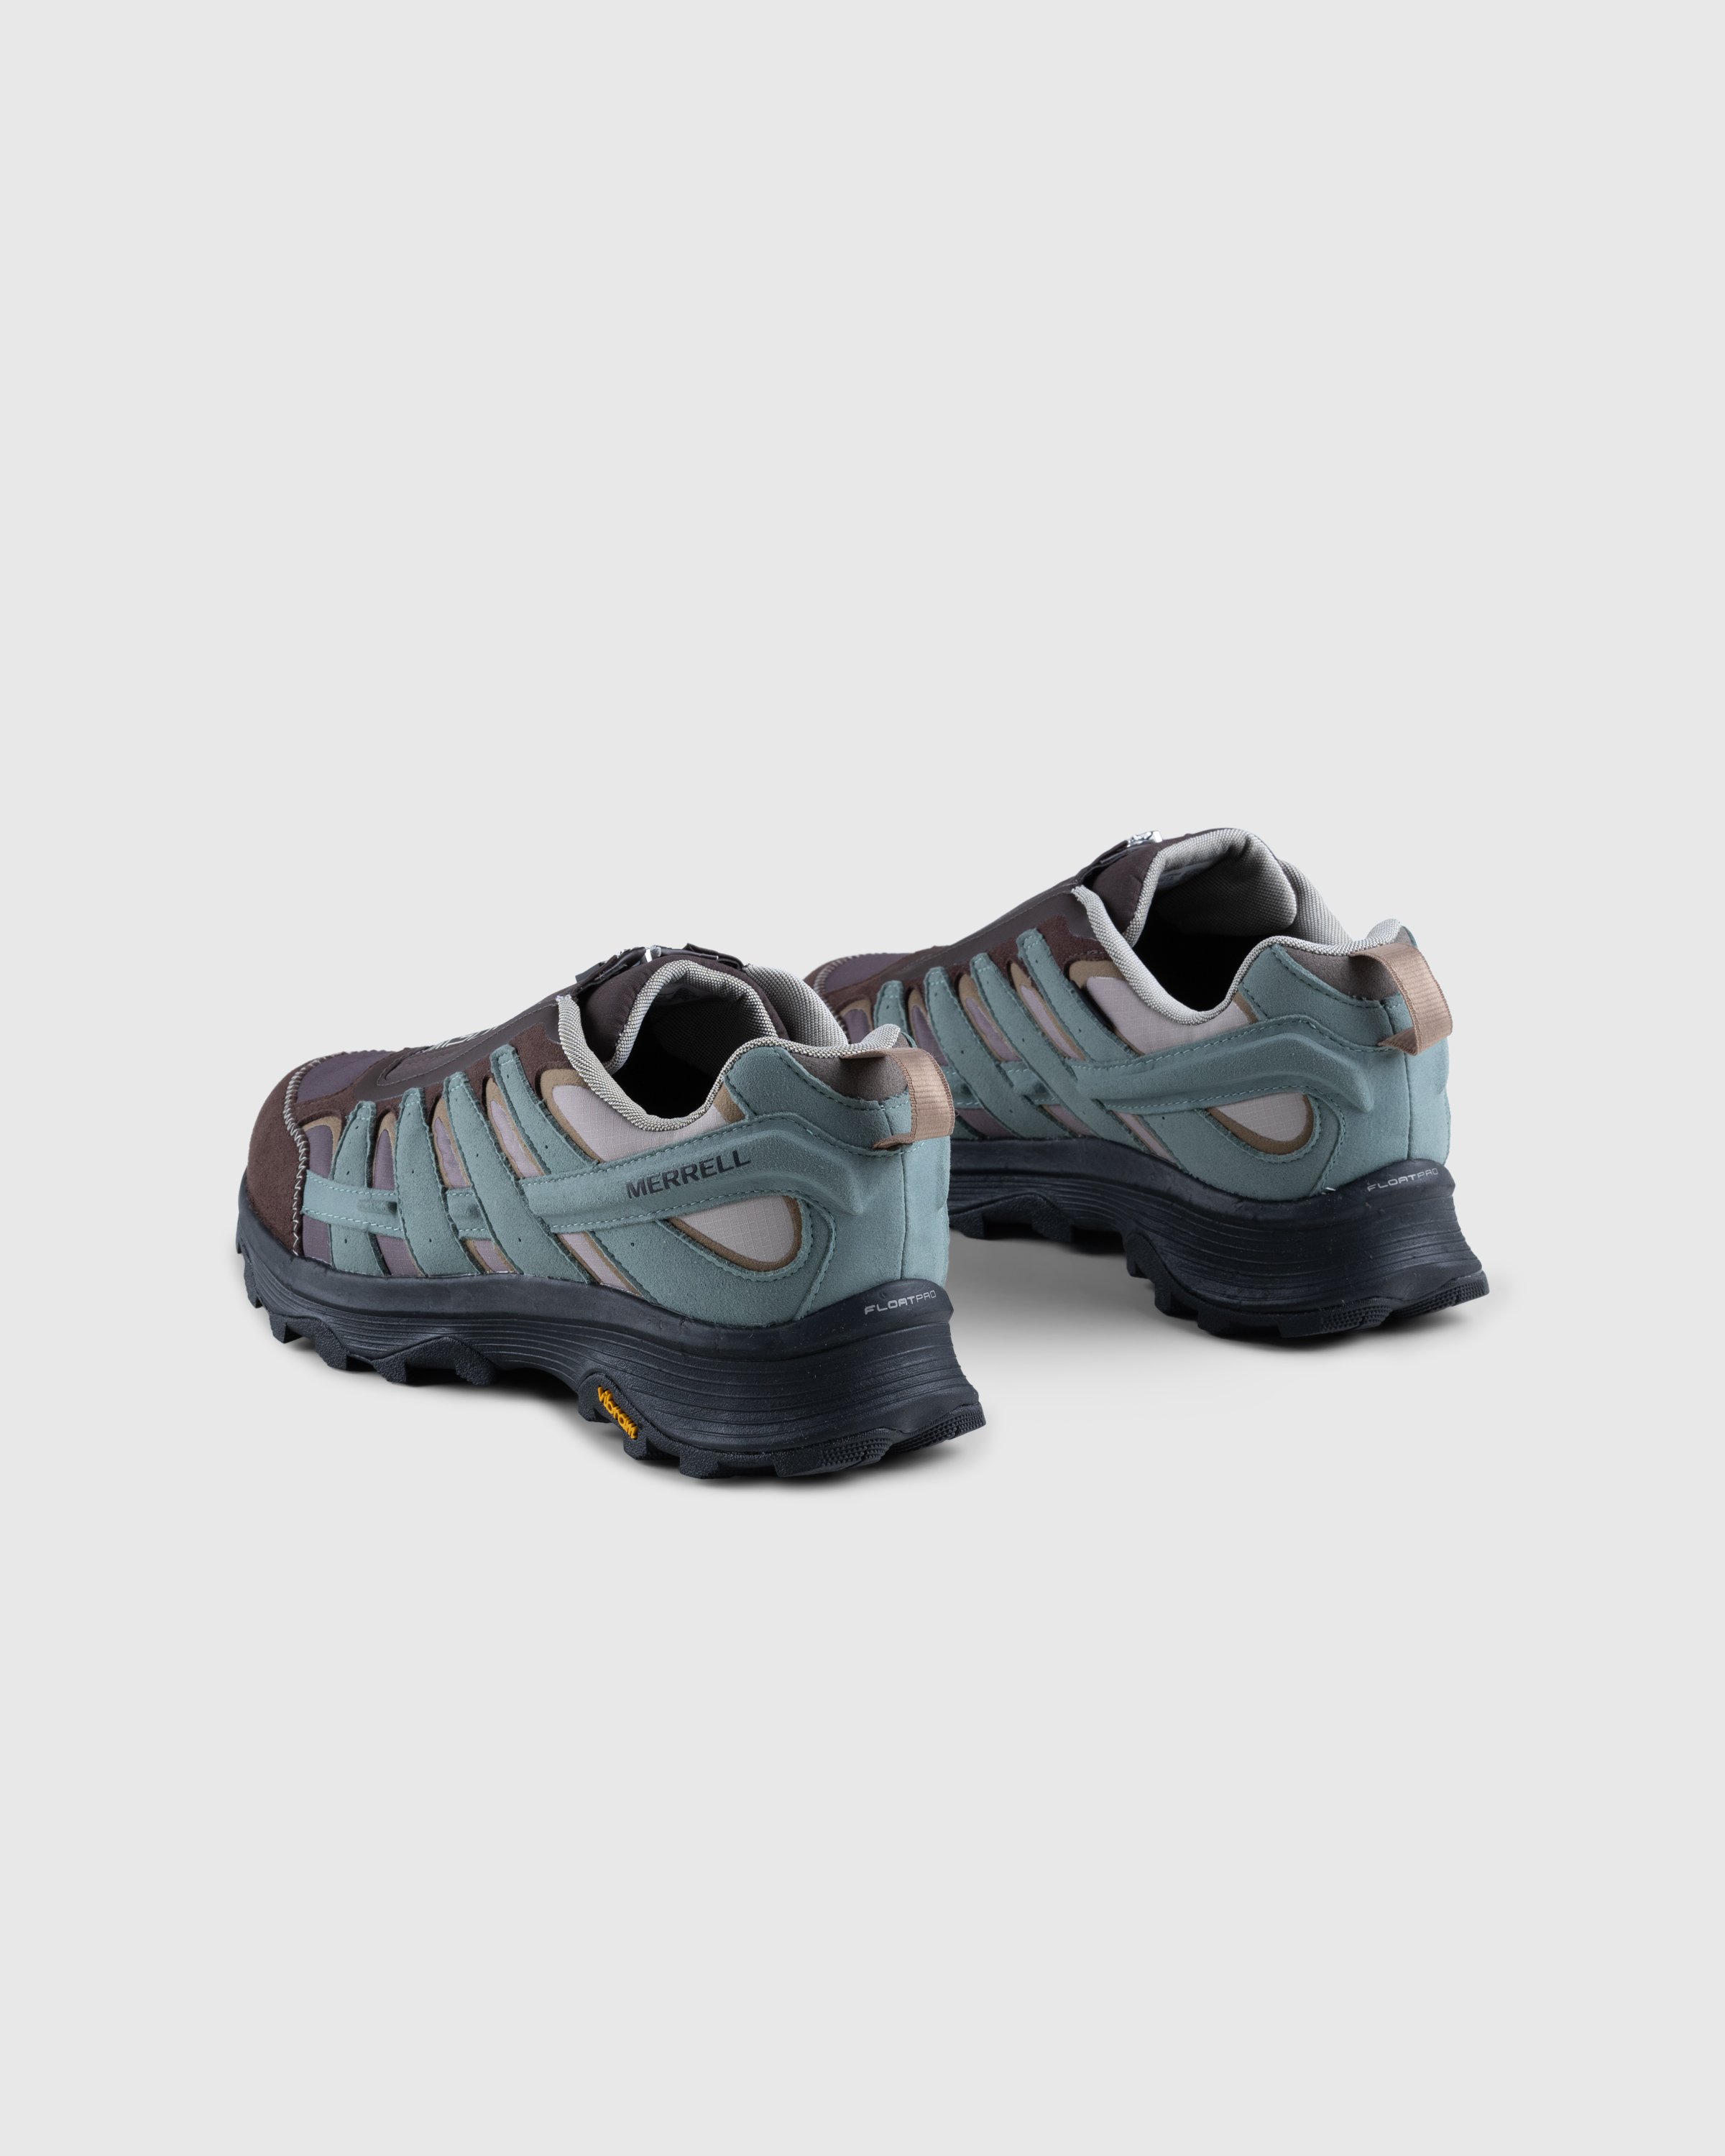 Merrell - Moab Speed Zip GORE-TEX Forest/Espresso - Footwear - Multi - Image 4